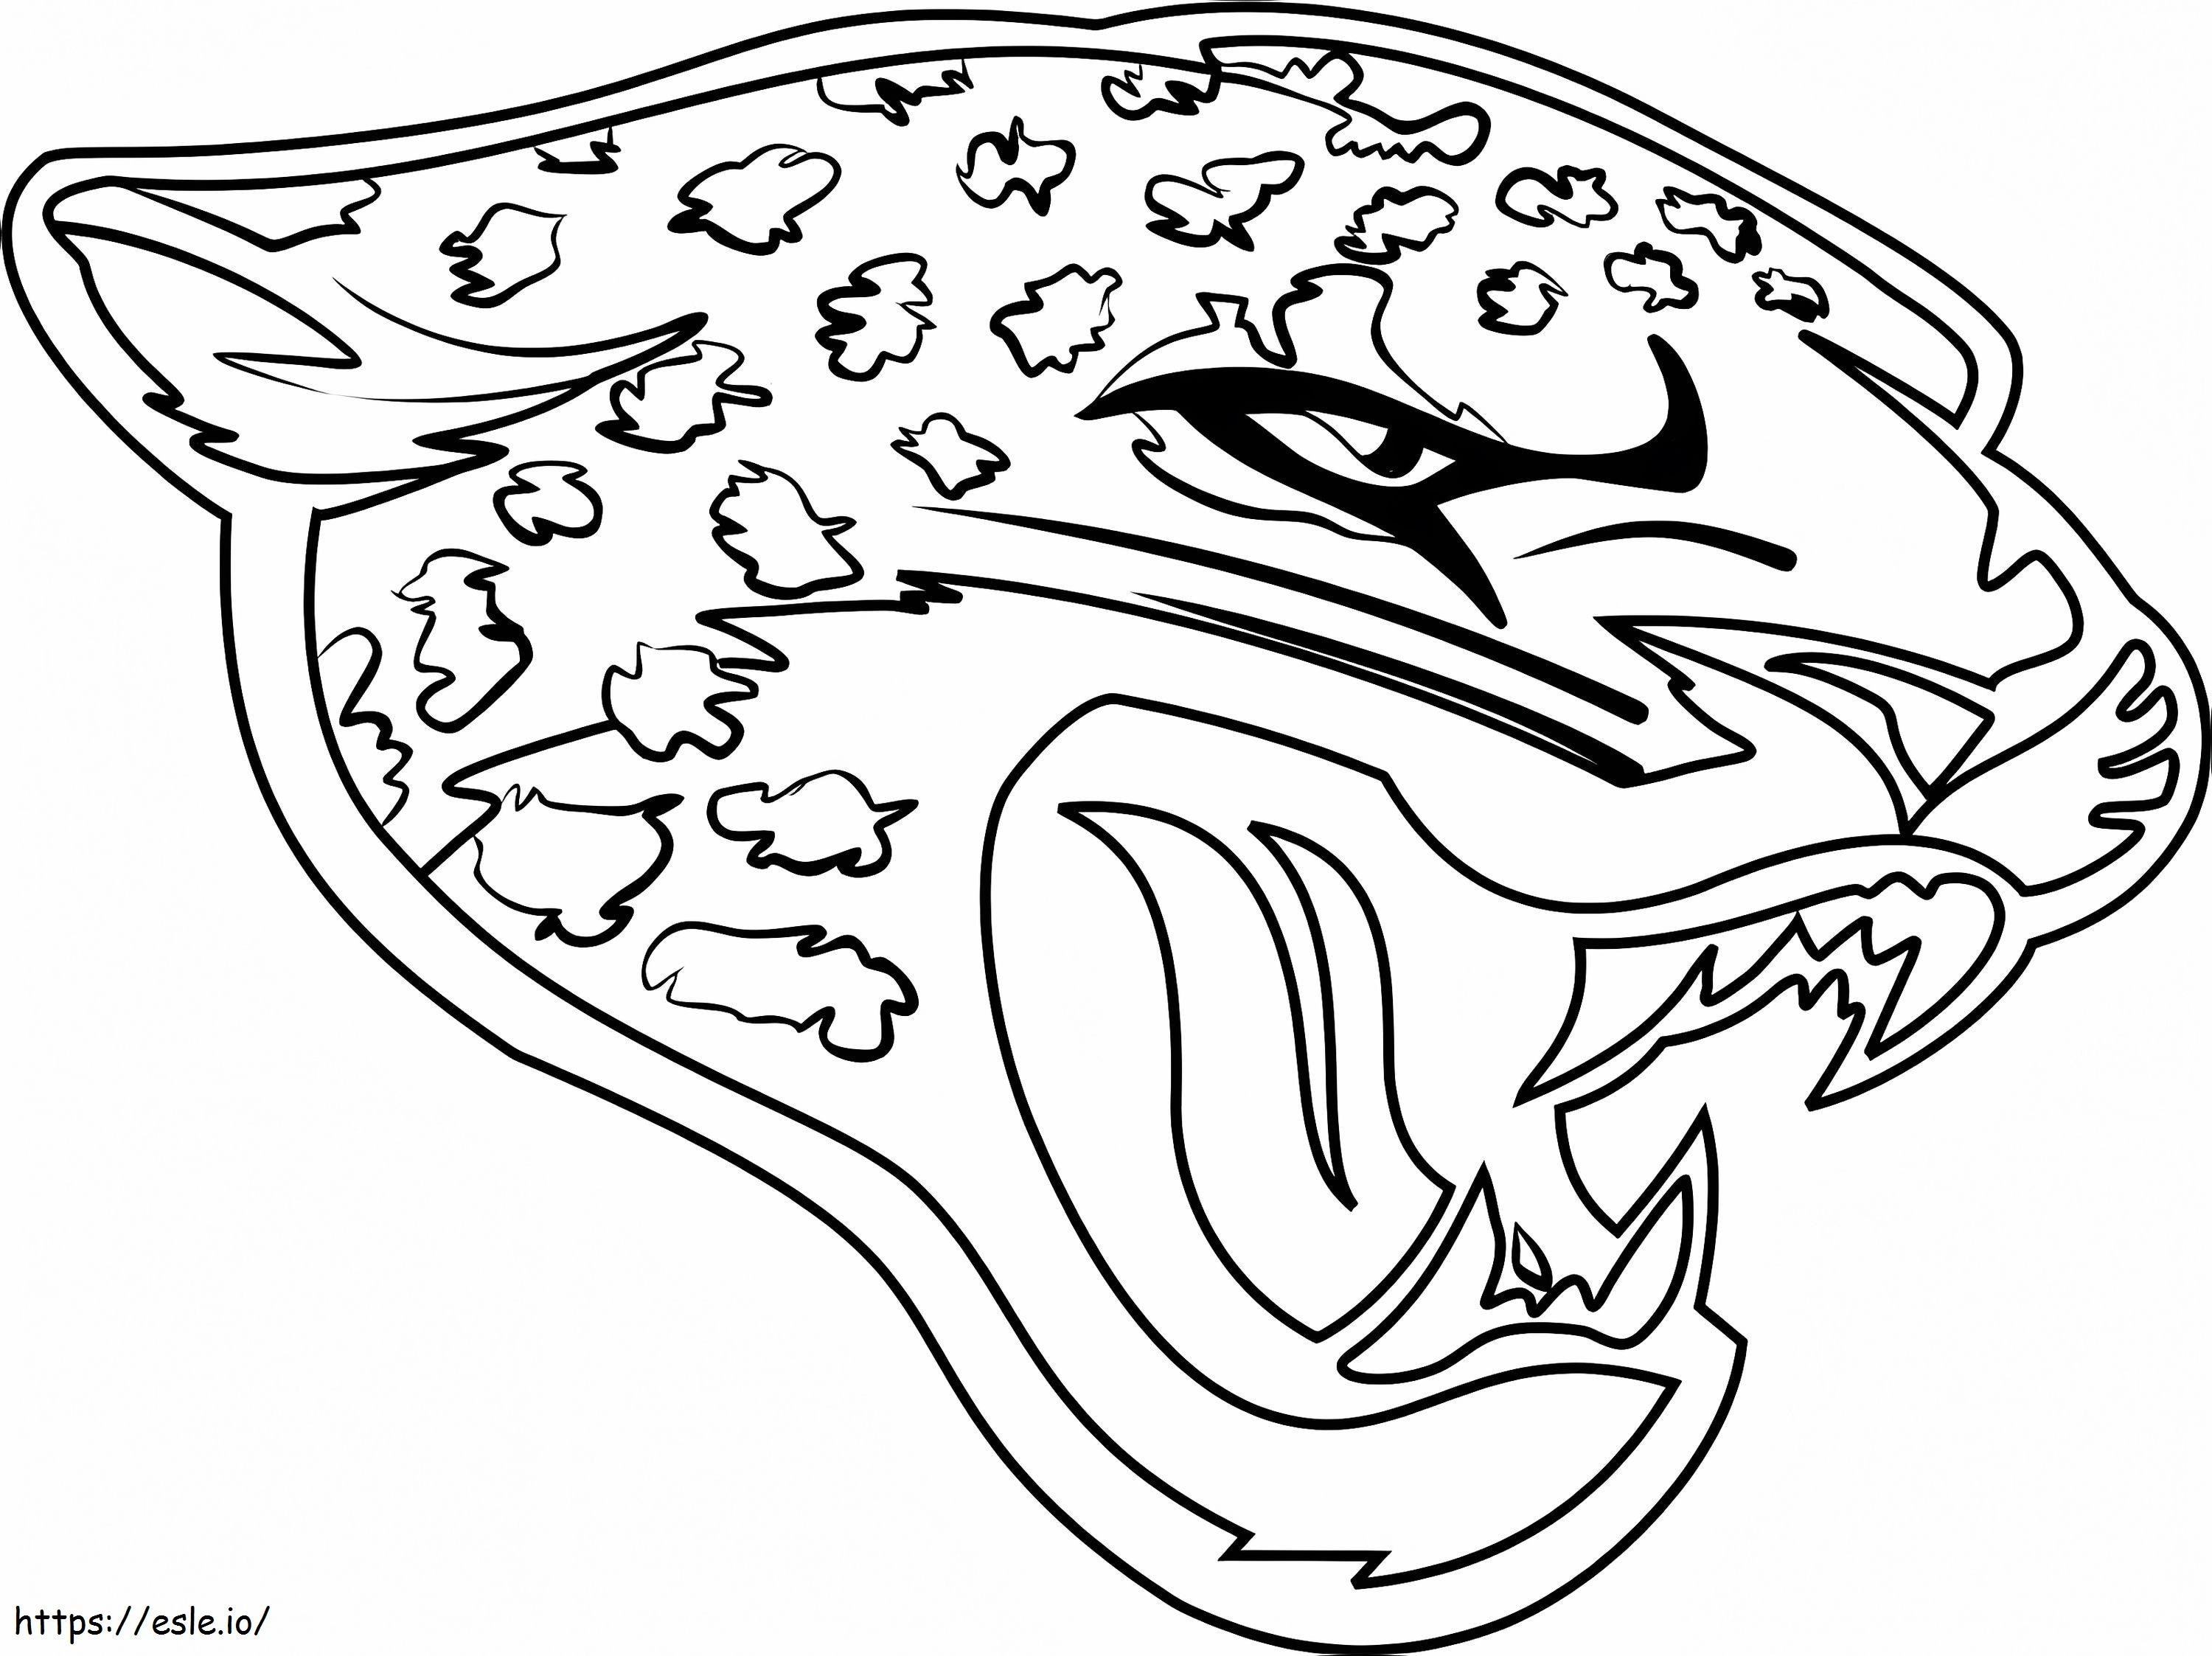 Jacksonville Jaguars Logo coloring page